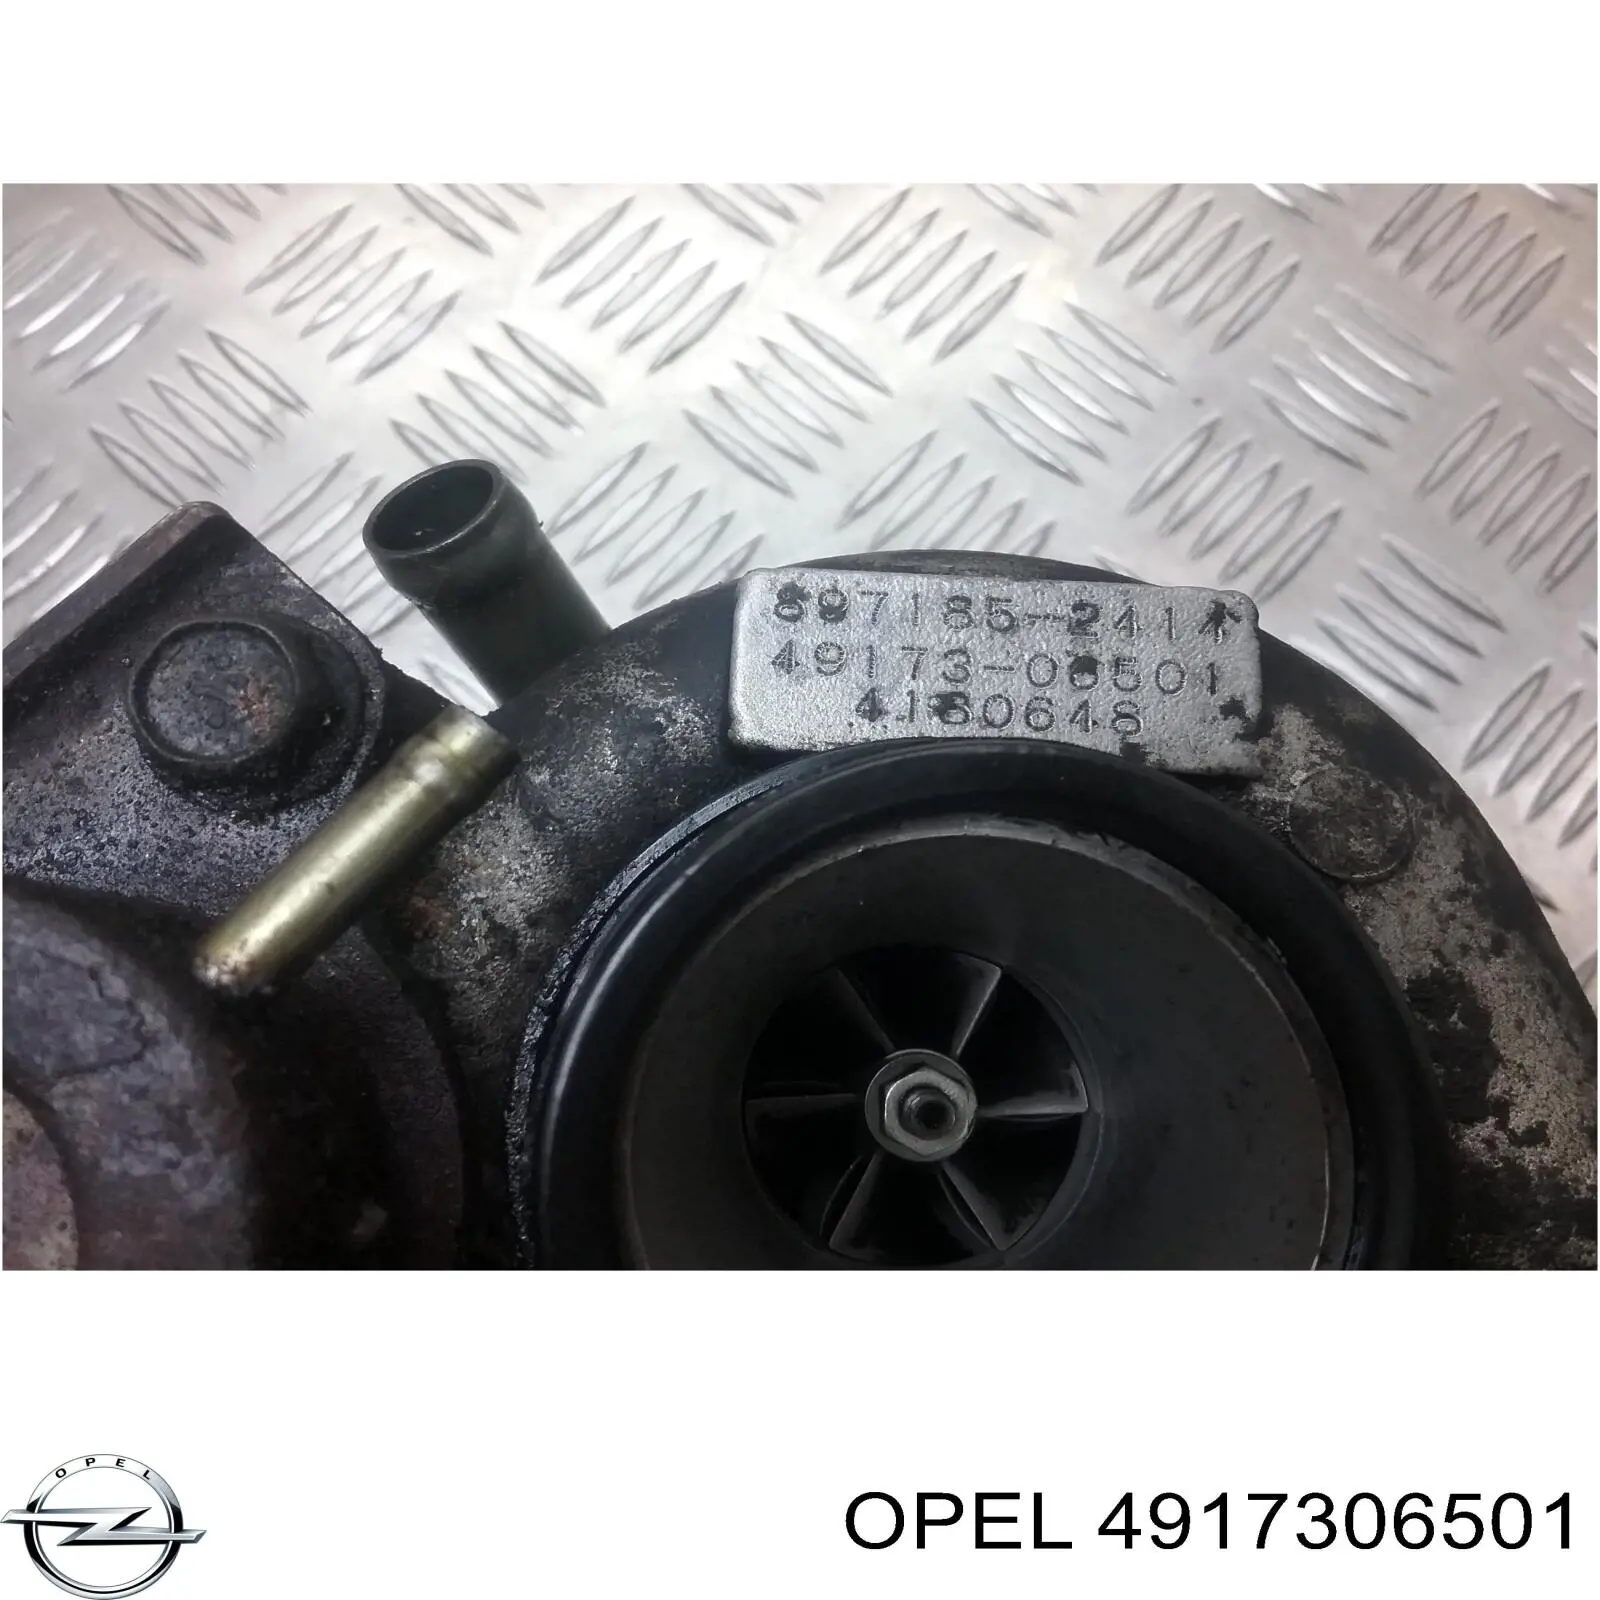 4917306501 Opel turbocompresor